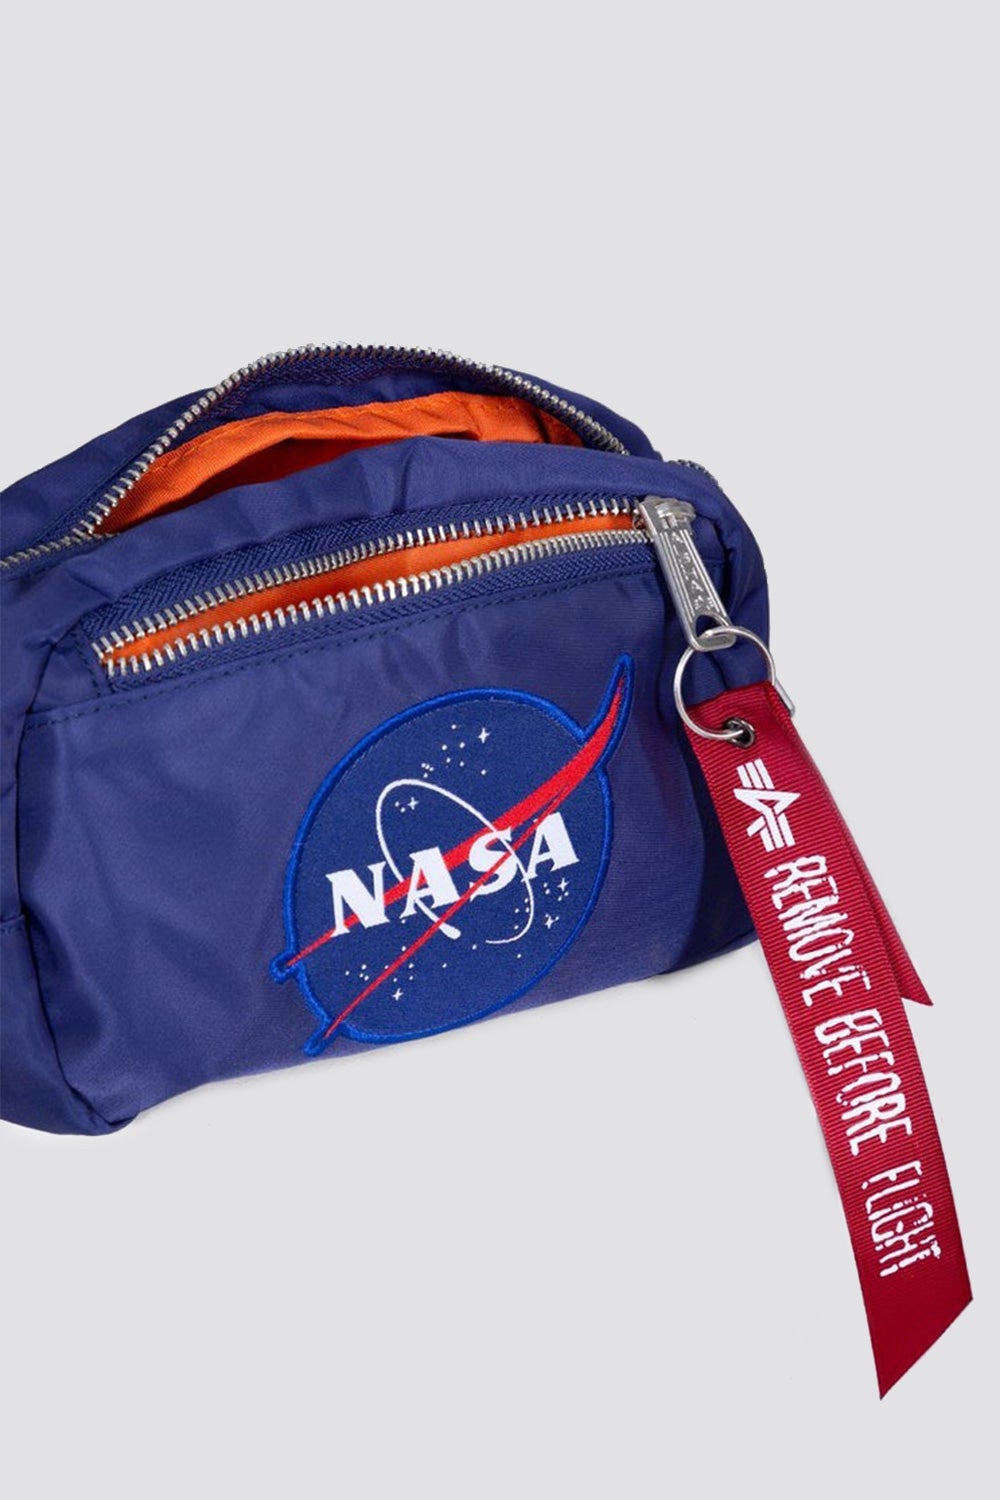 NASA WAIST BAG ACCESSORY Alpha Industries, Inc. 